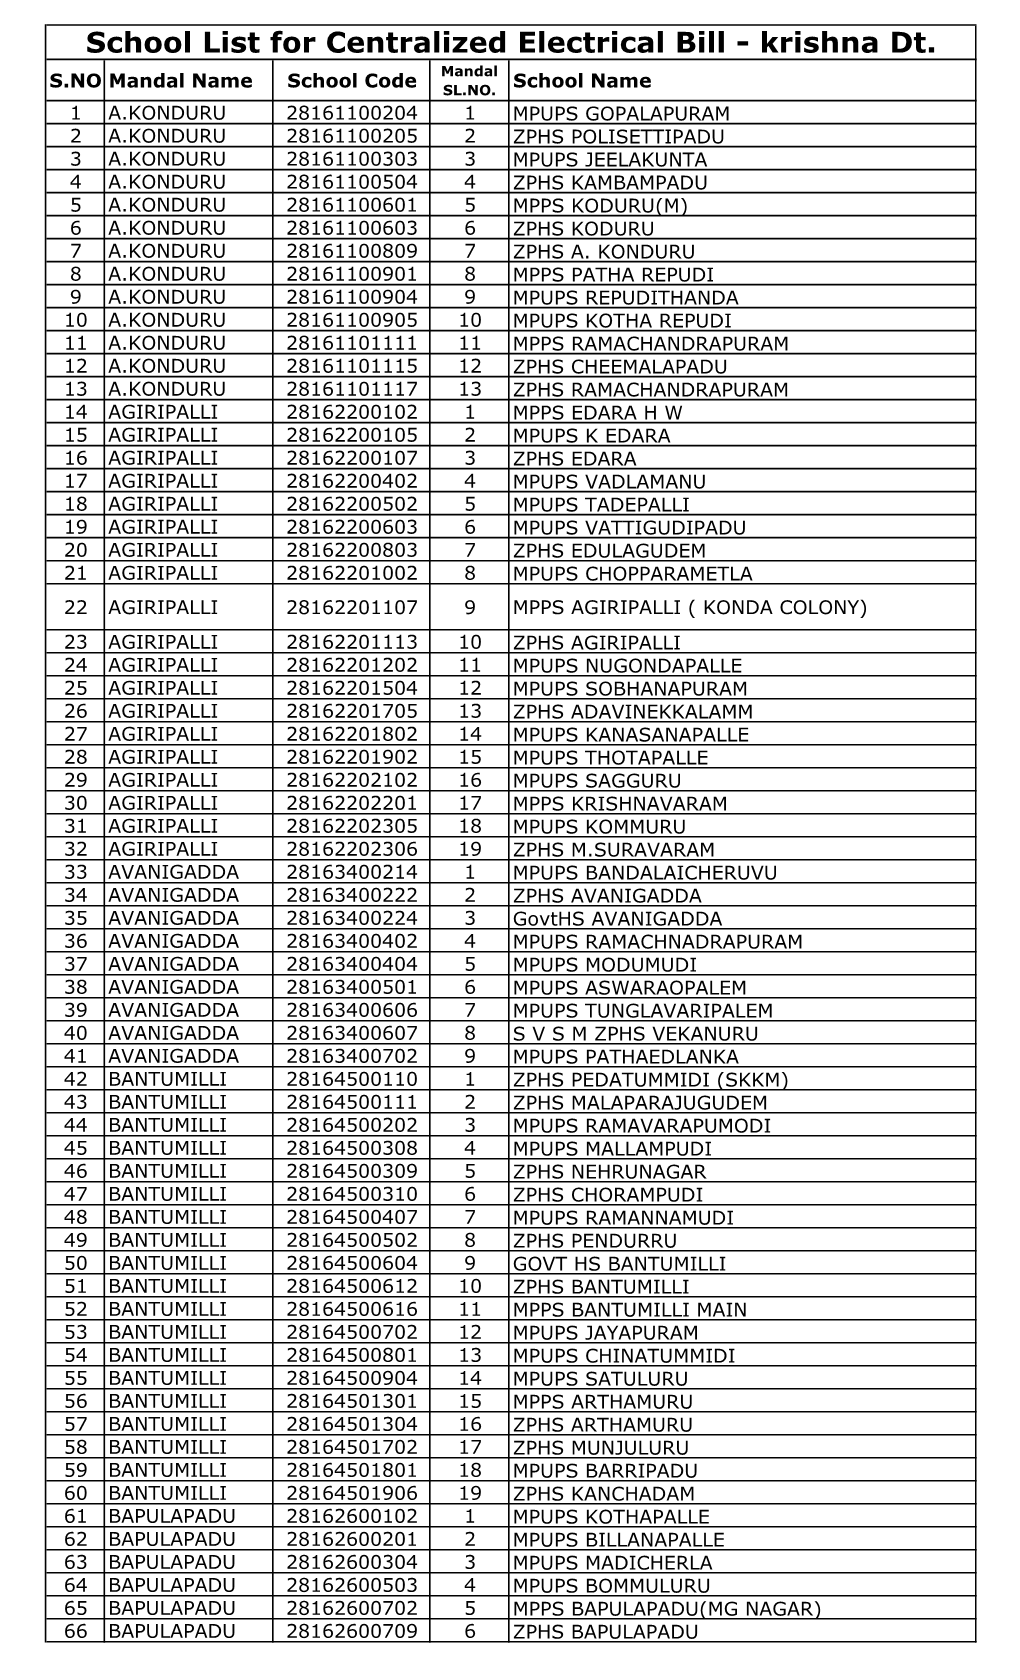 School List for Centralized Electrical Bill - Krishna Dt